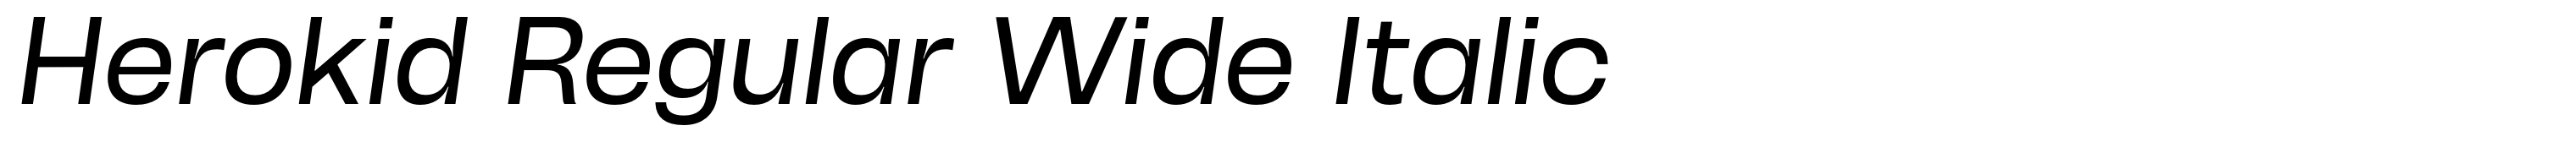 Herokid Regular Wide Italic